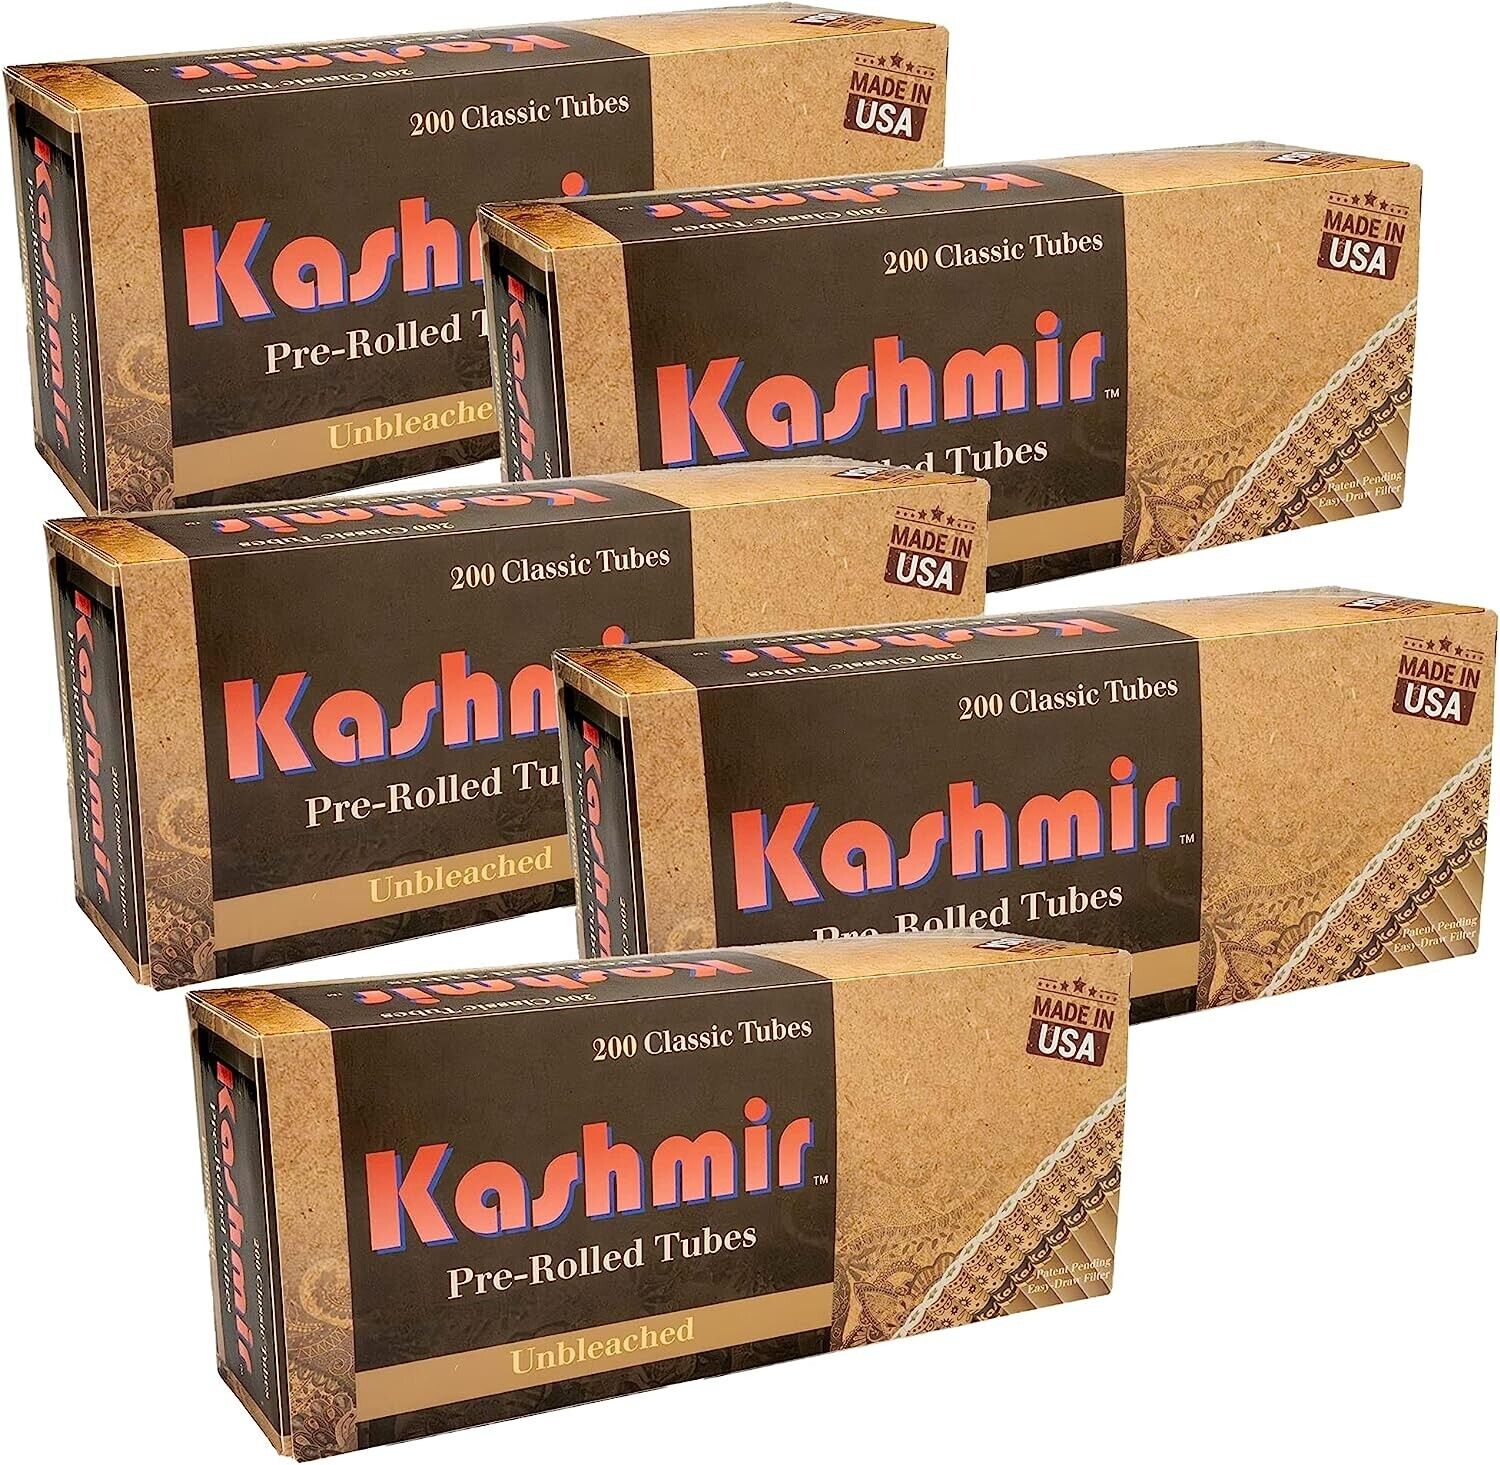 Kashmir Classic Unbleached Cigarette Pre-Rolled Tubes 200/Pack - 1000 Count